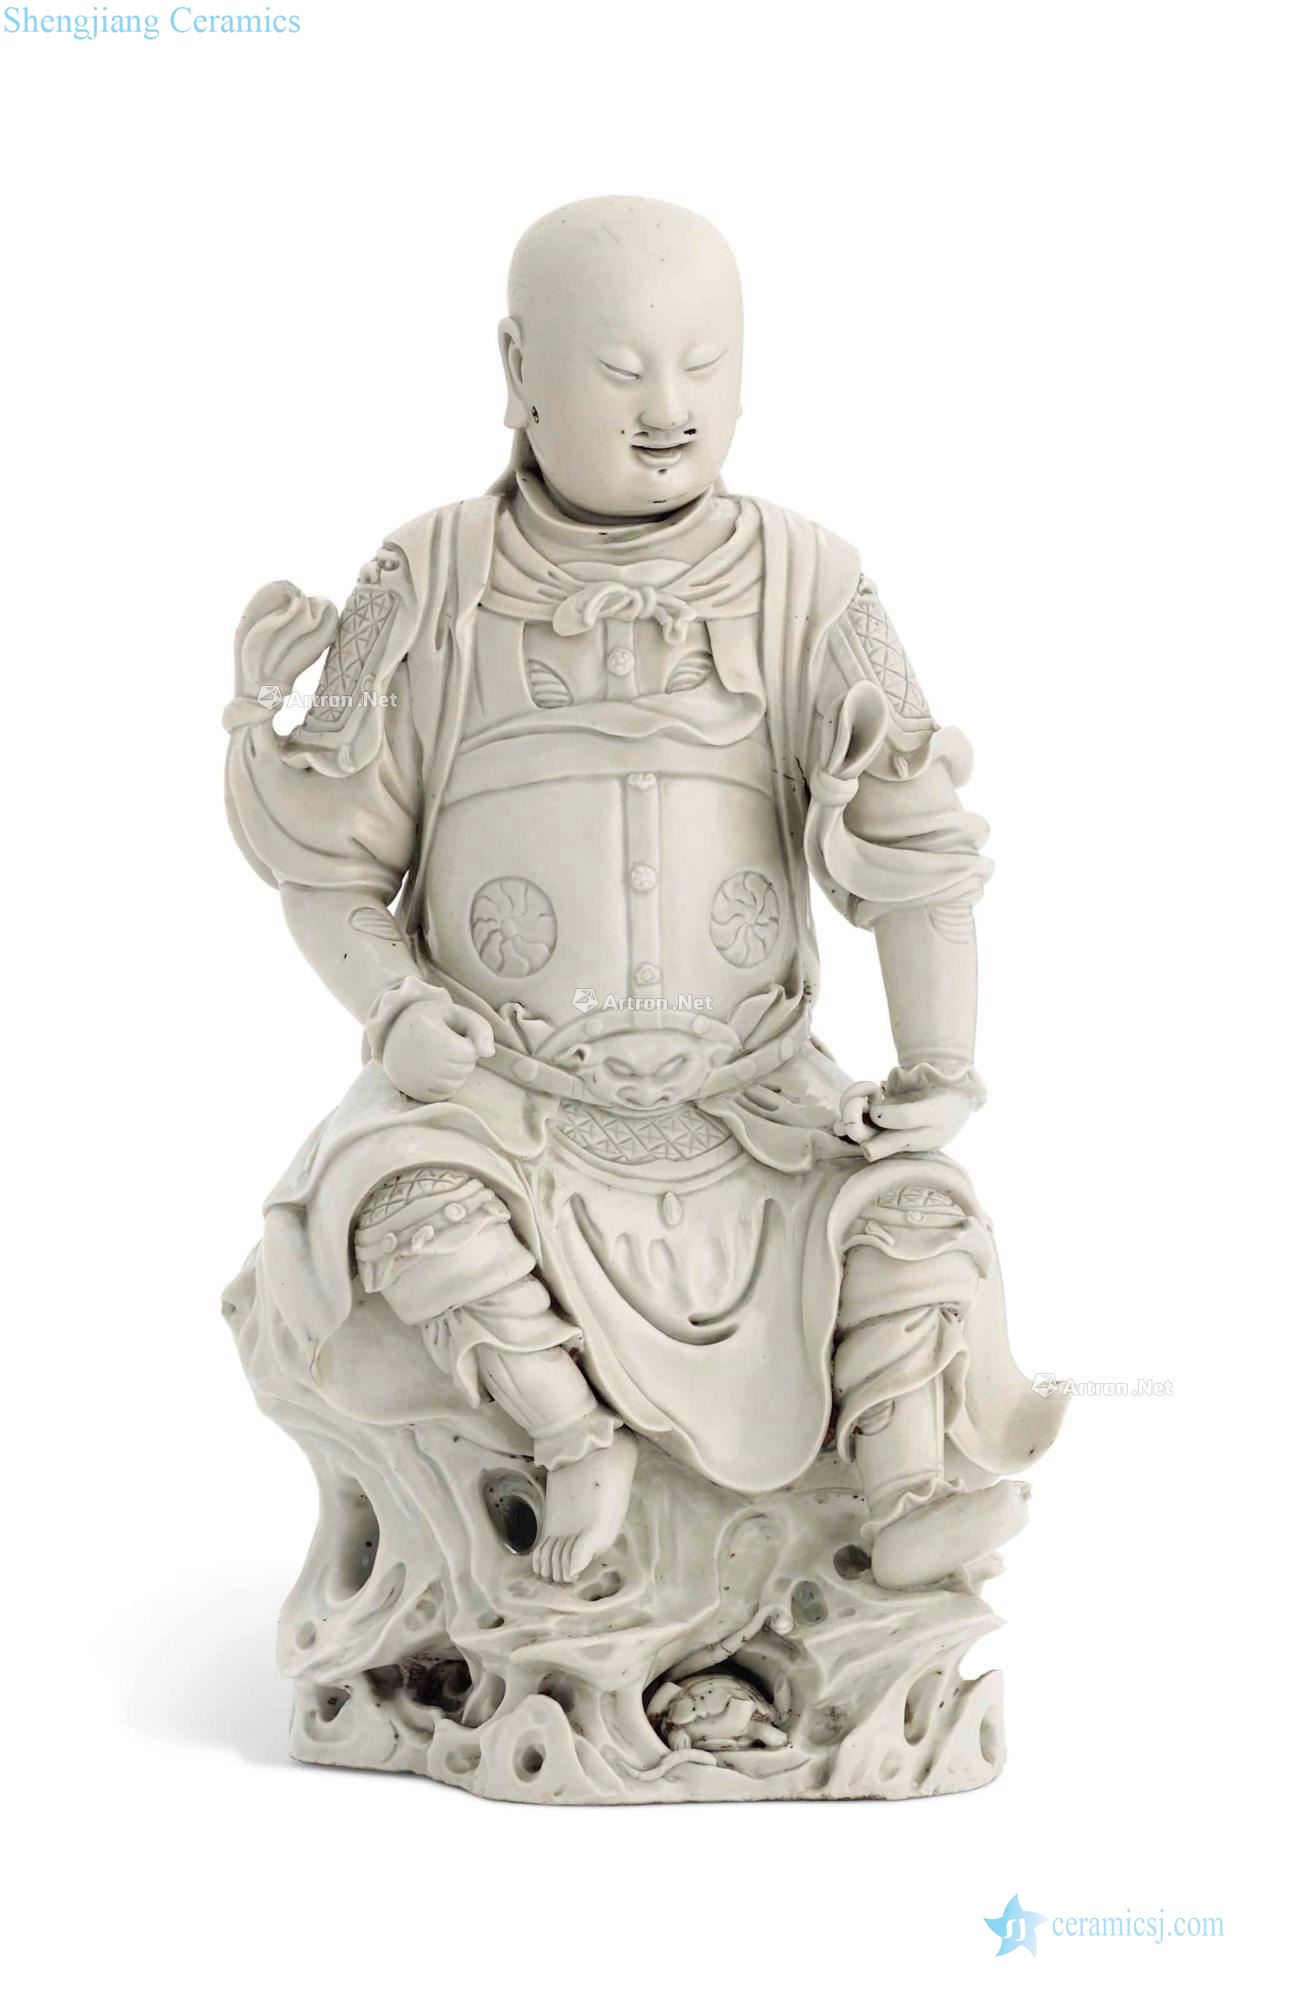 The late Ming dynasty Dehua white glaze emperor's statue